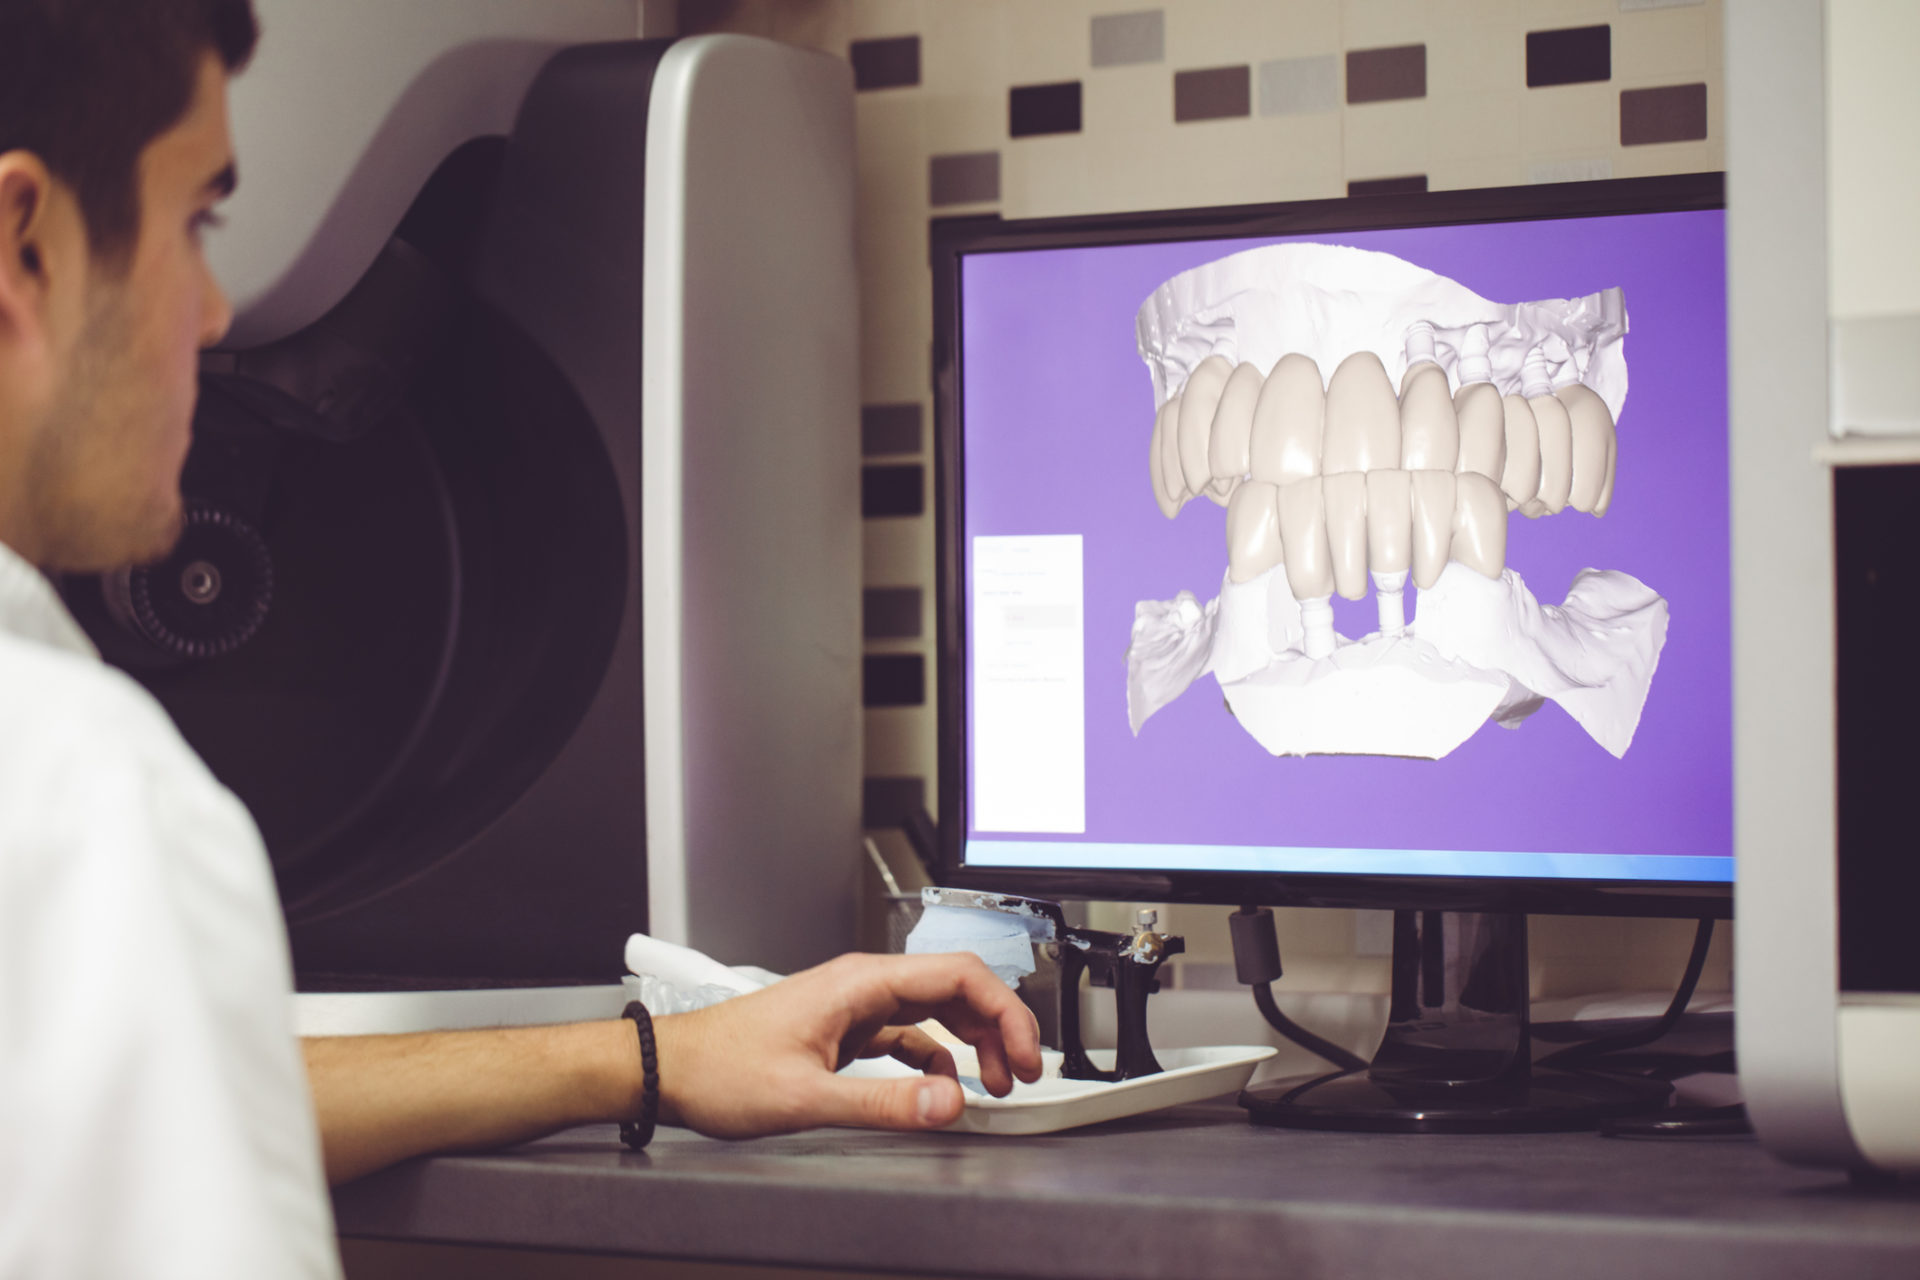 Orthodontics Practice Receiving Dental IT Services To Improve Their Practice